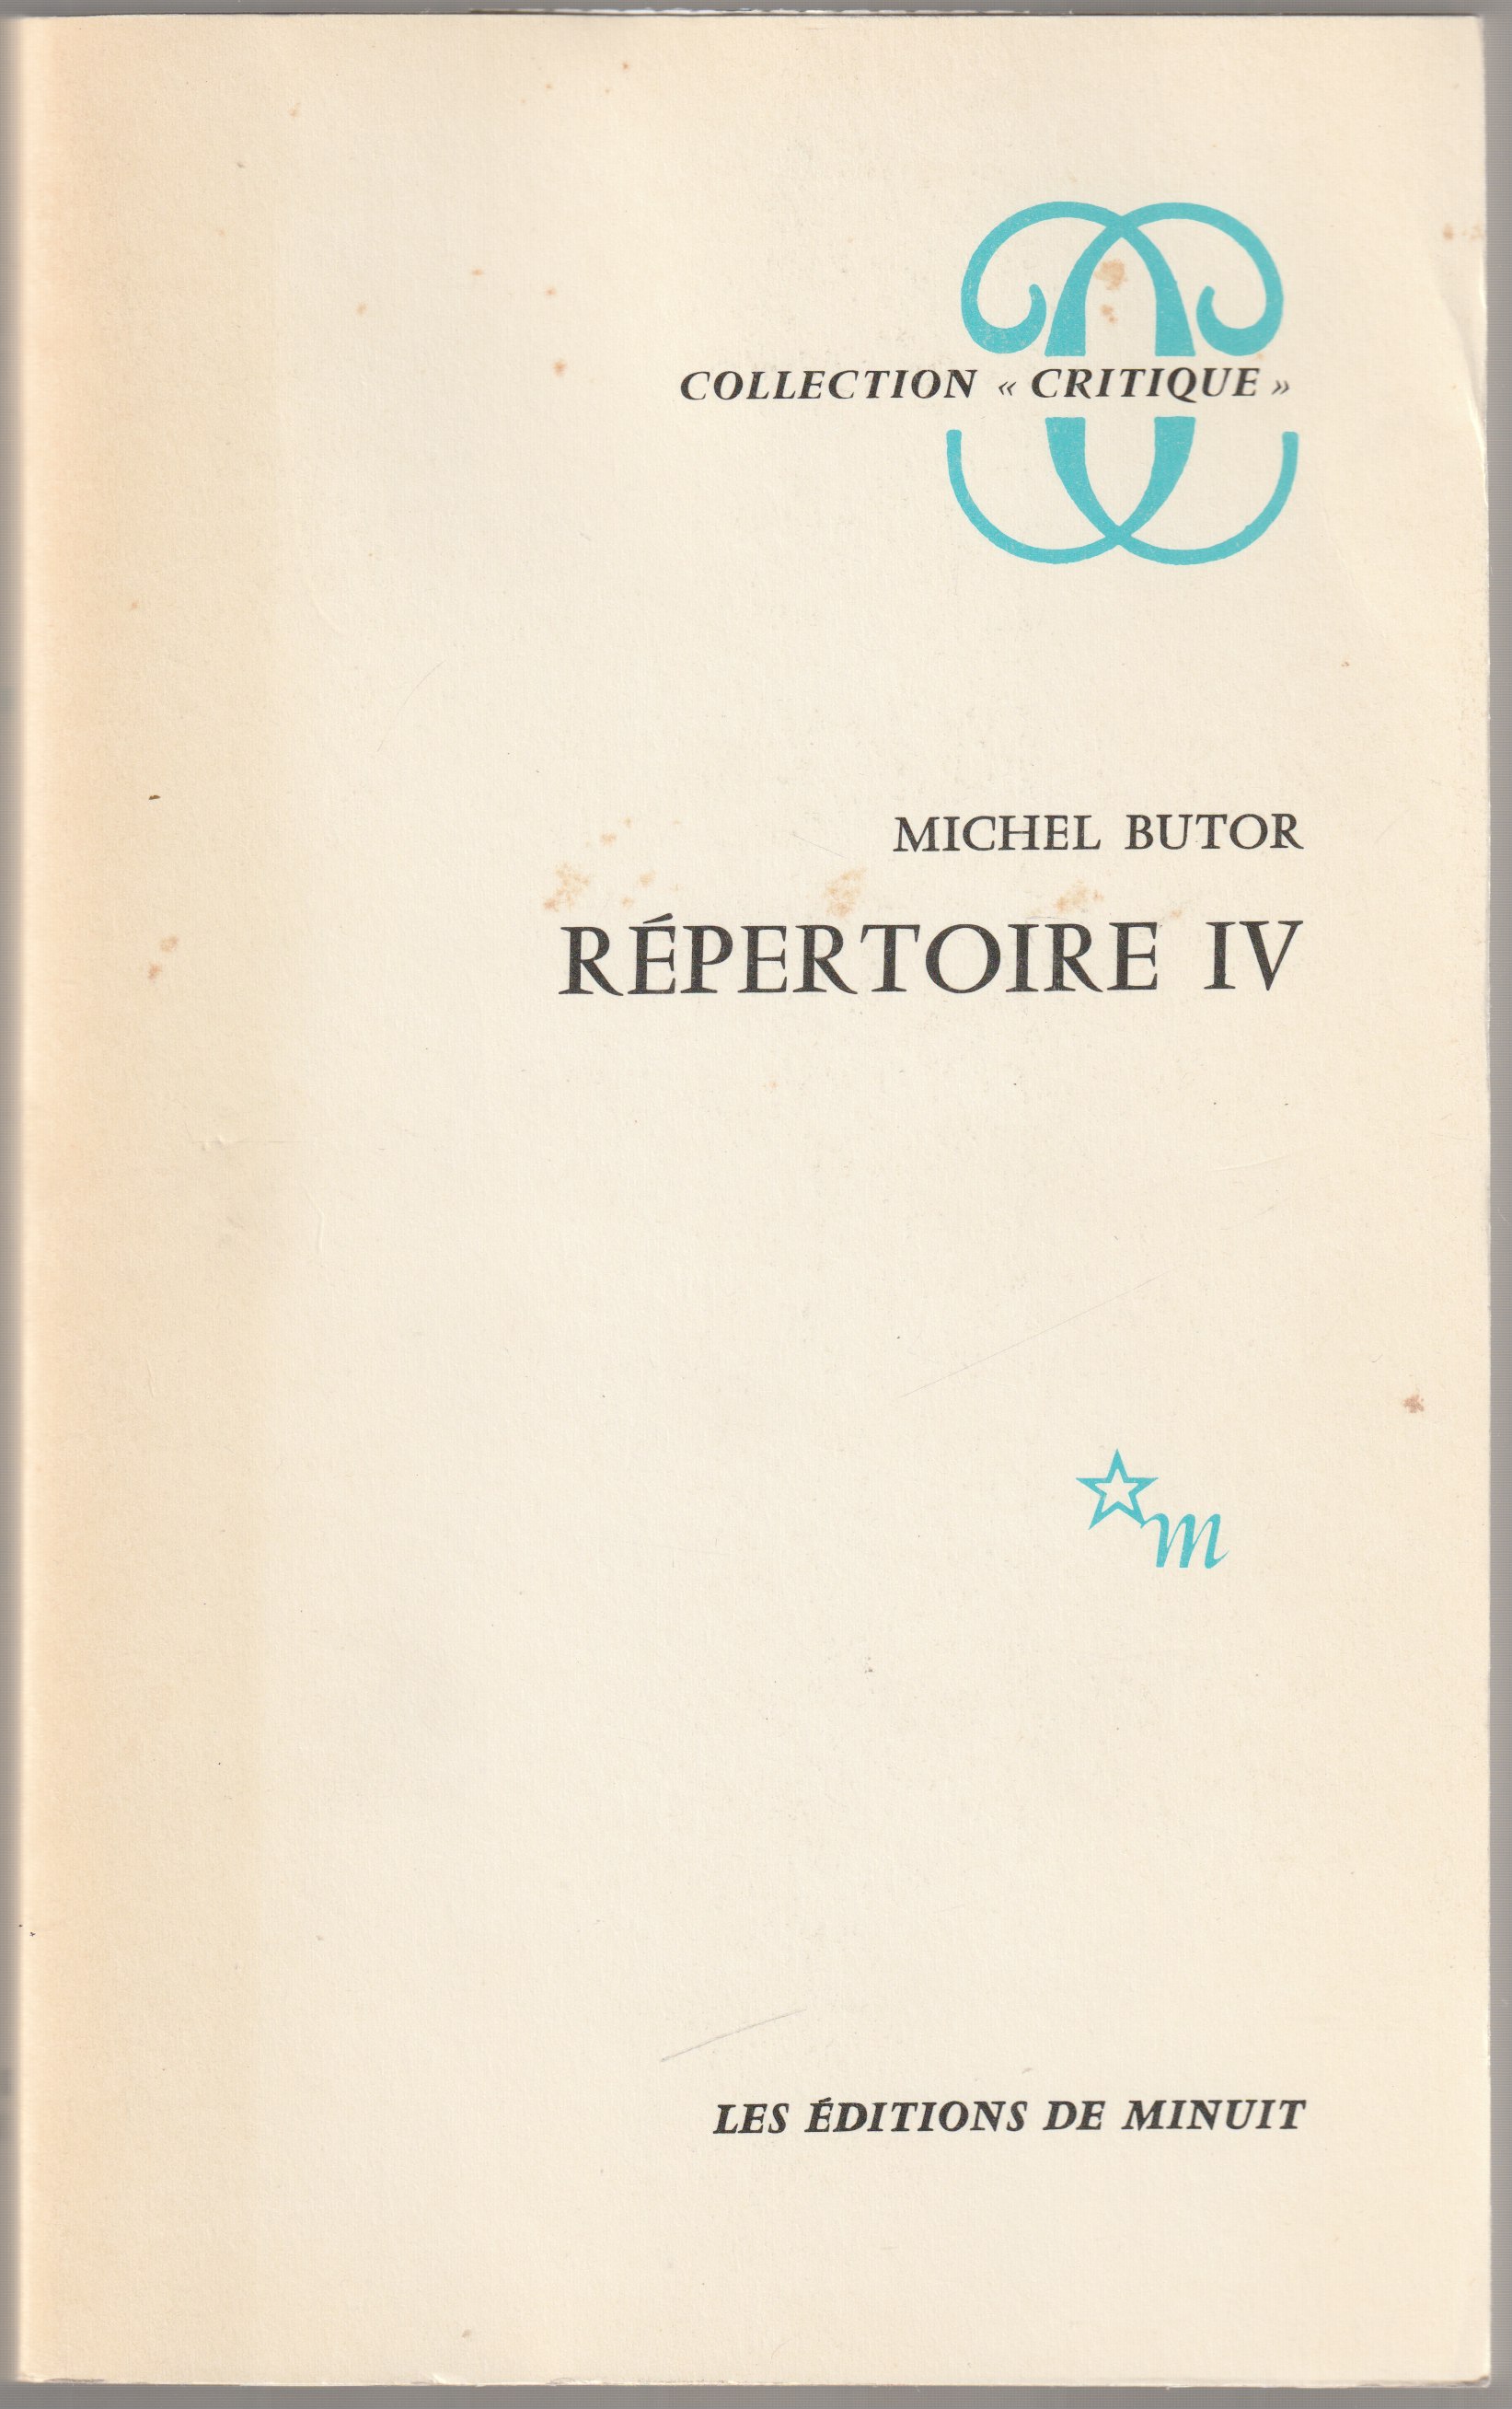 Repertoire IV